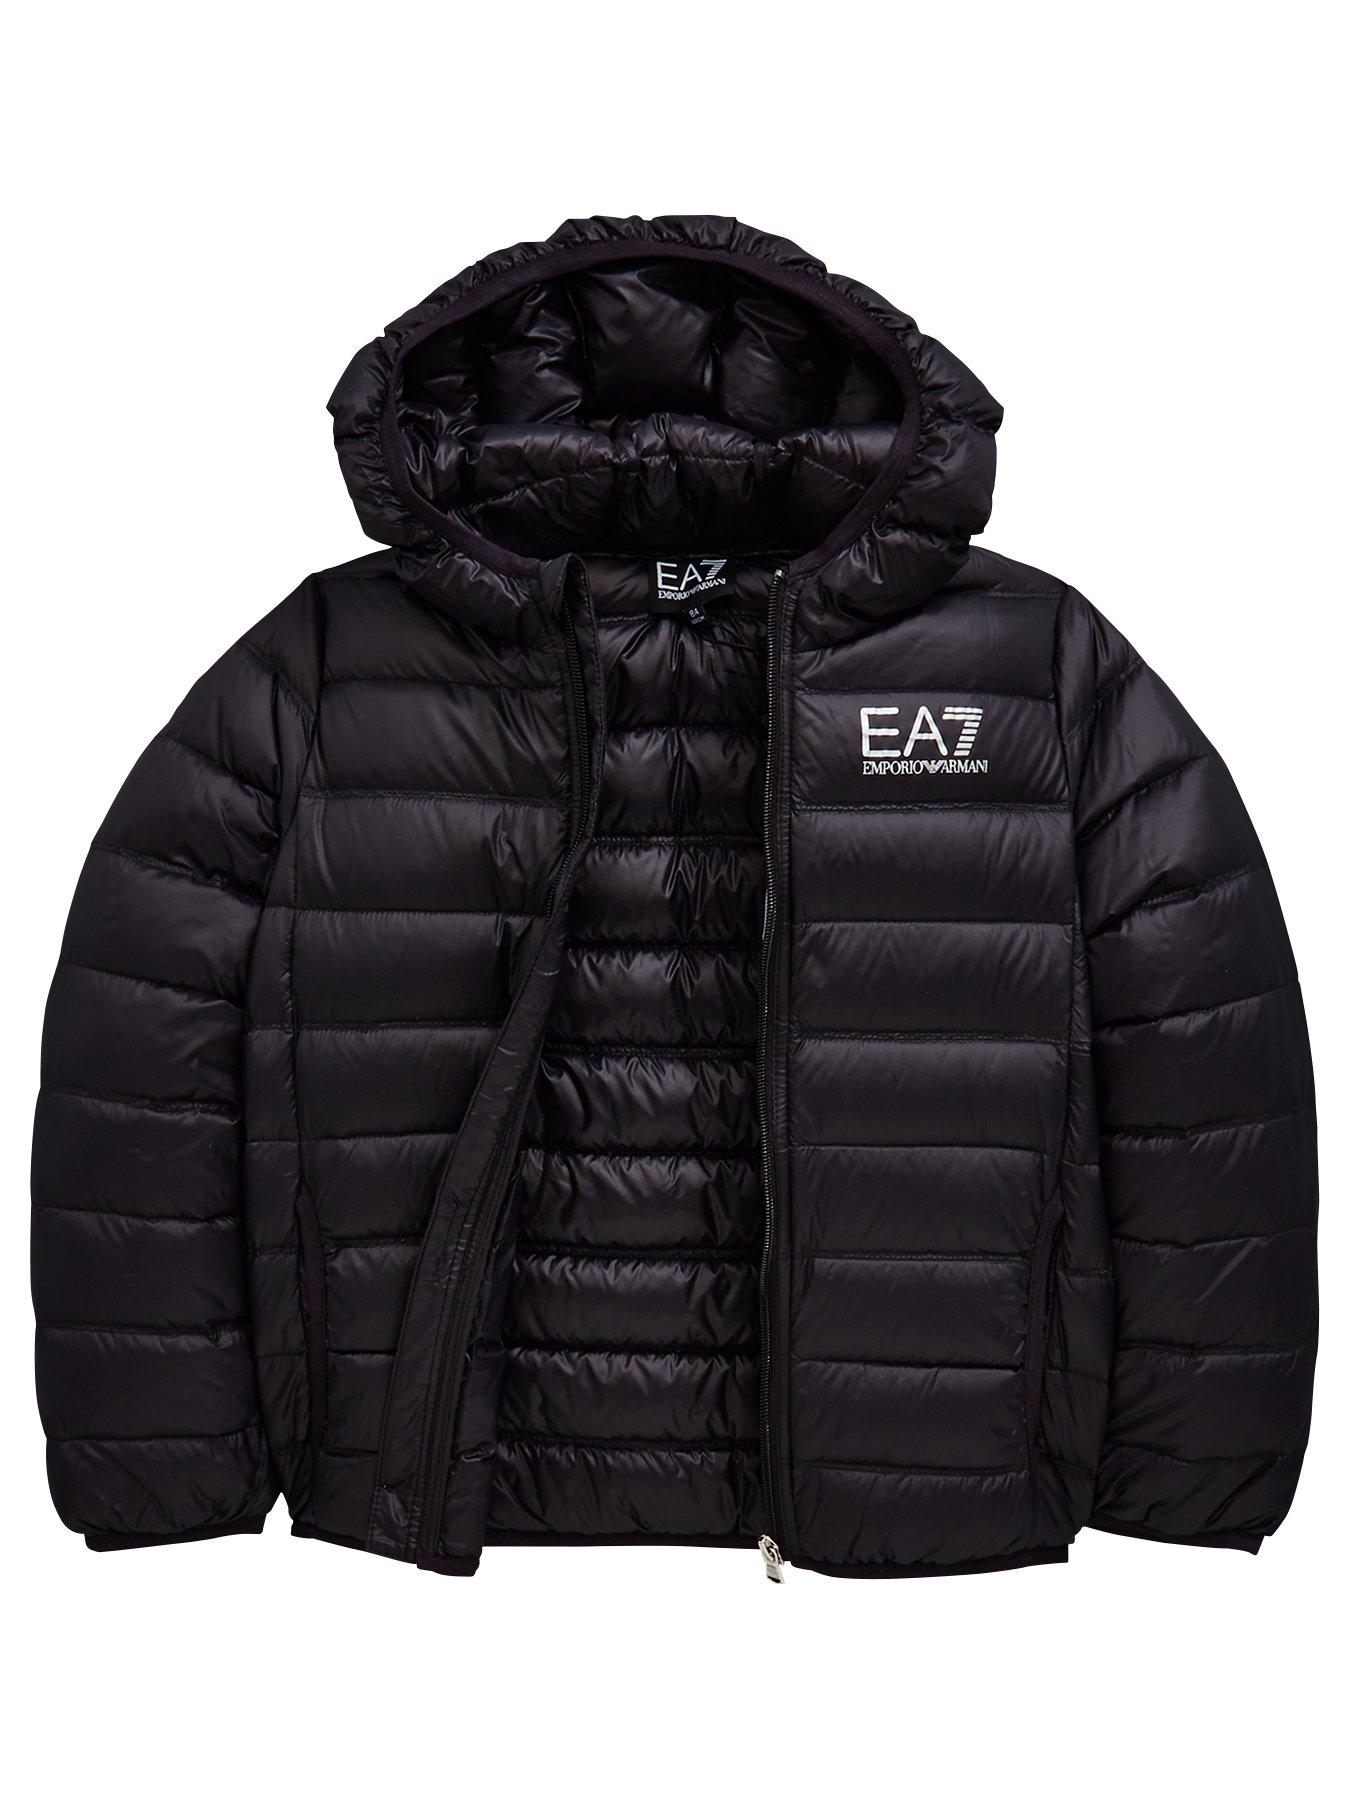 Savant cascade statistieken Ea7 emporio armani | Coats & jackets | Boys clothes | Child & baby |  www.very.co.uk